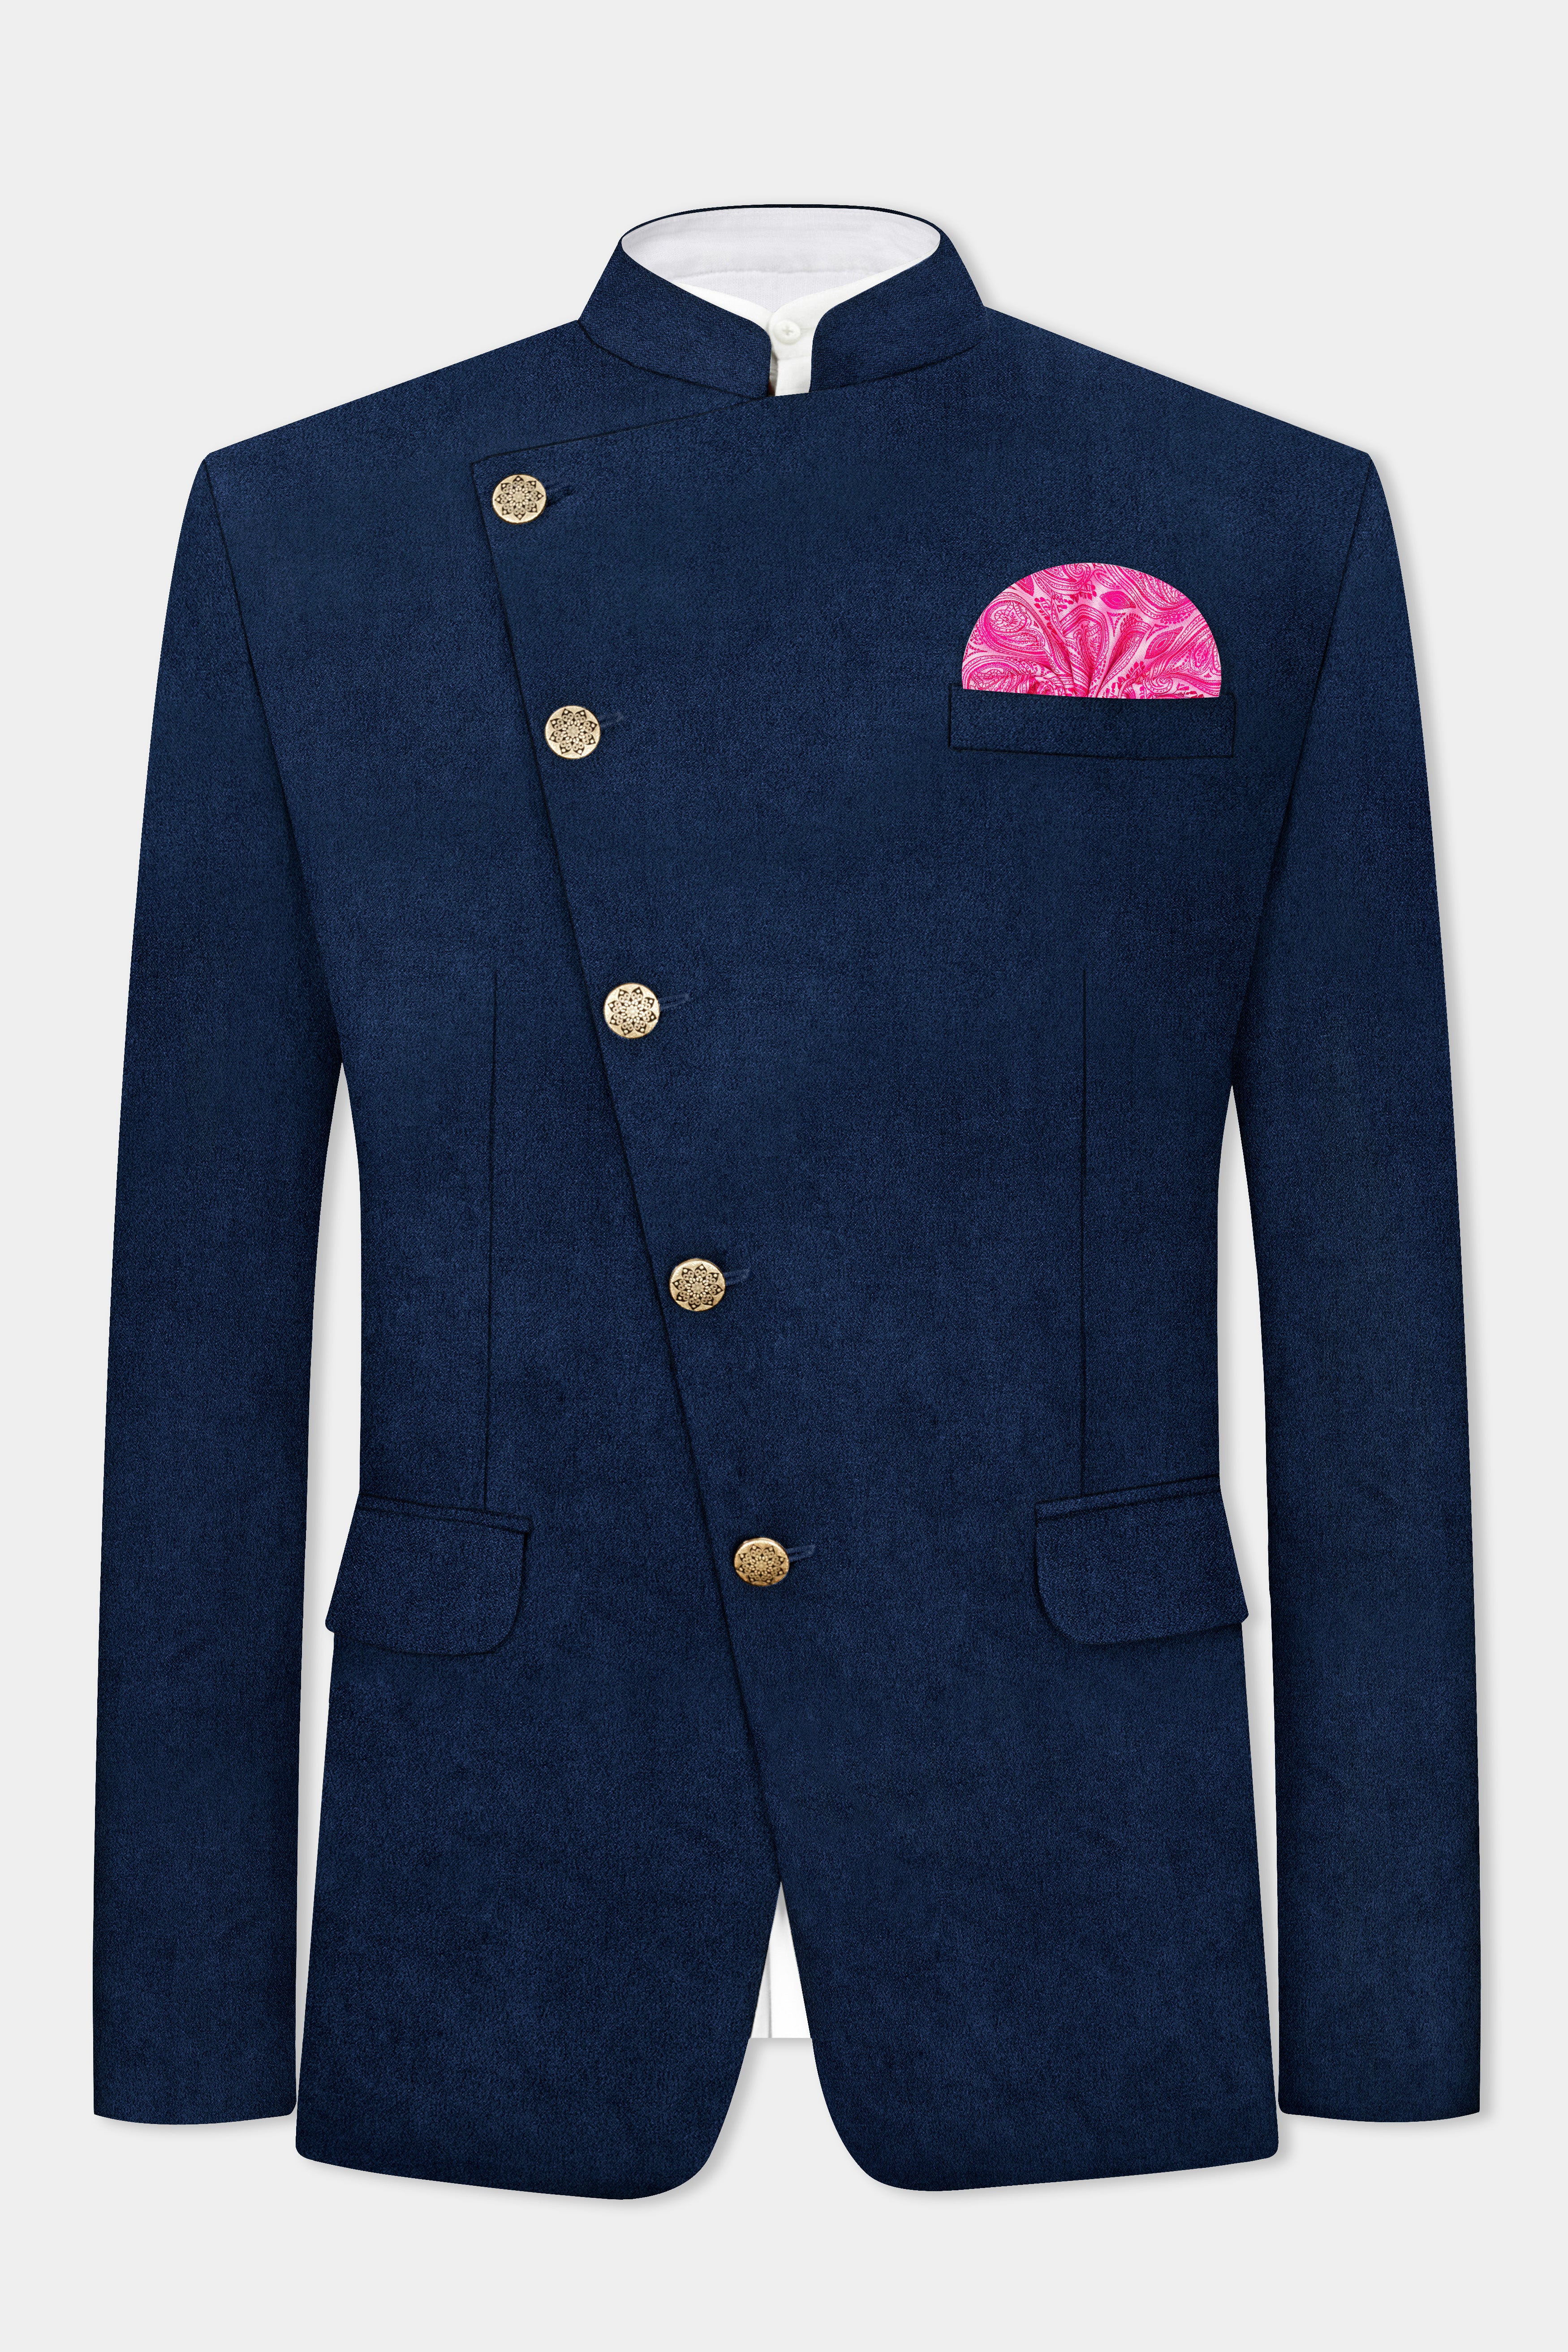 Downriver Blue Velvet Cross Placket Bandhgala Suit